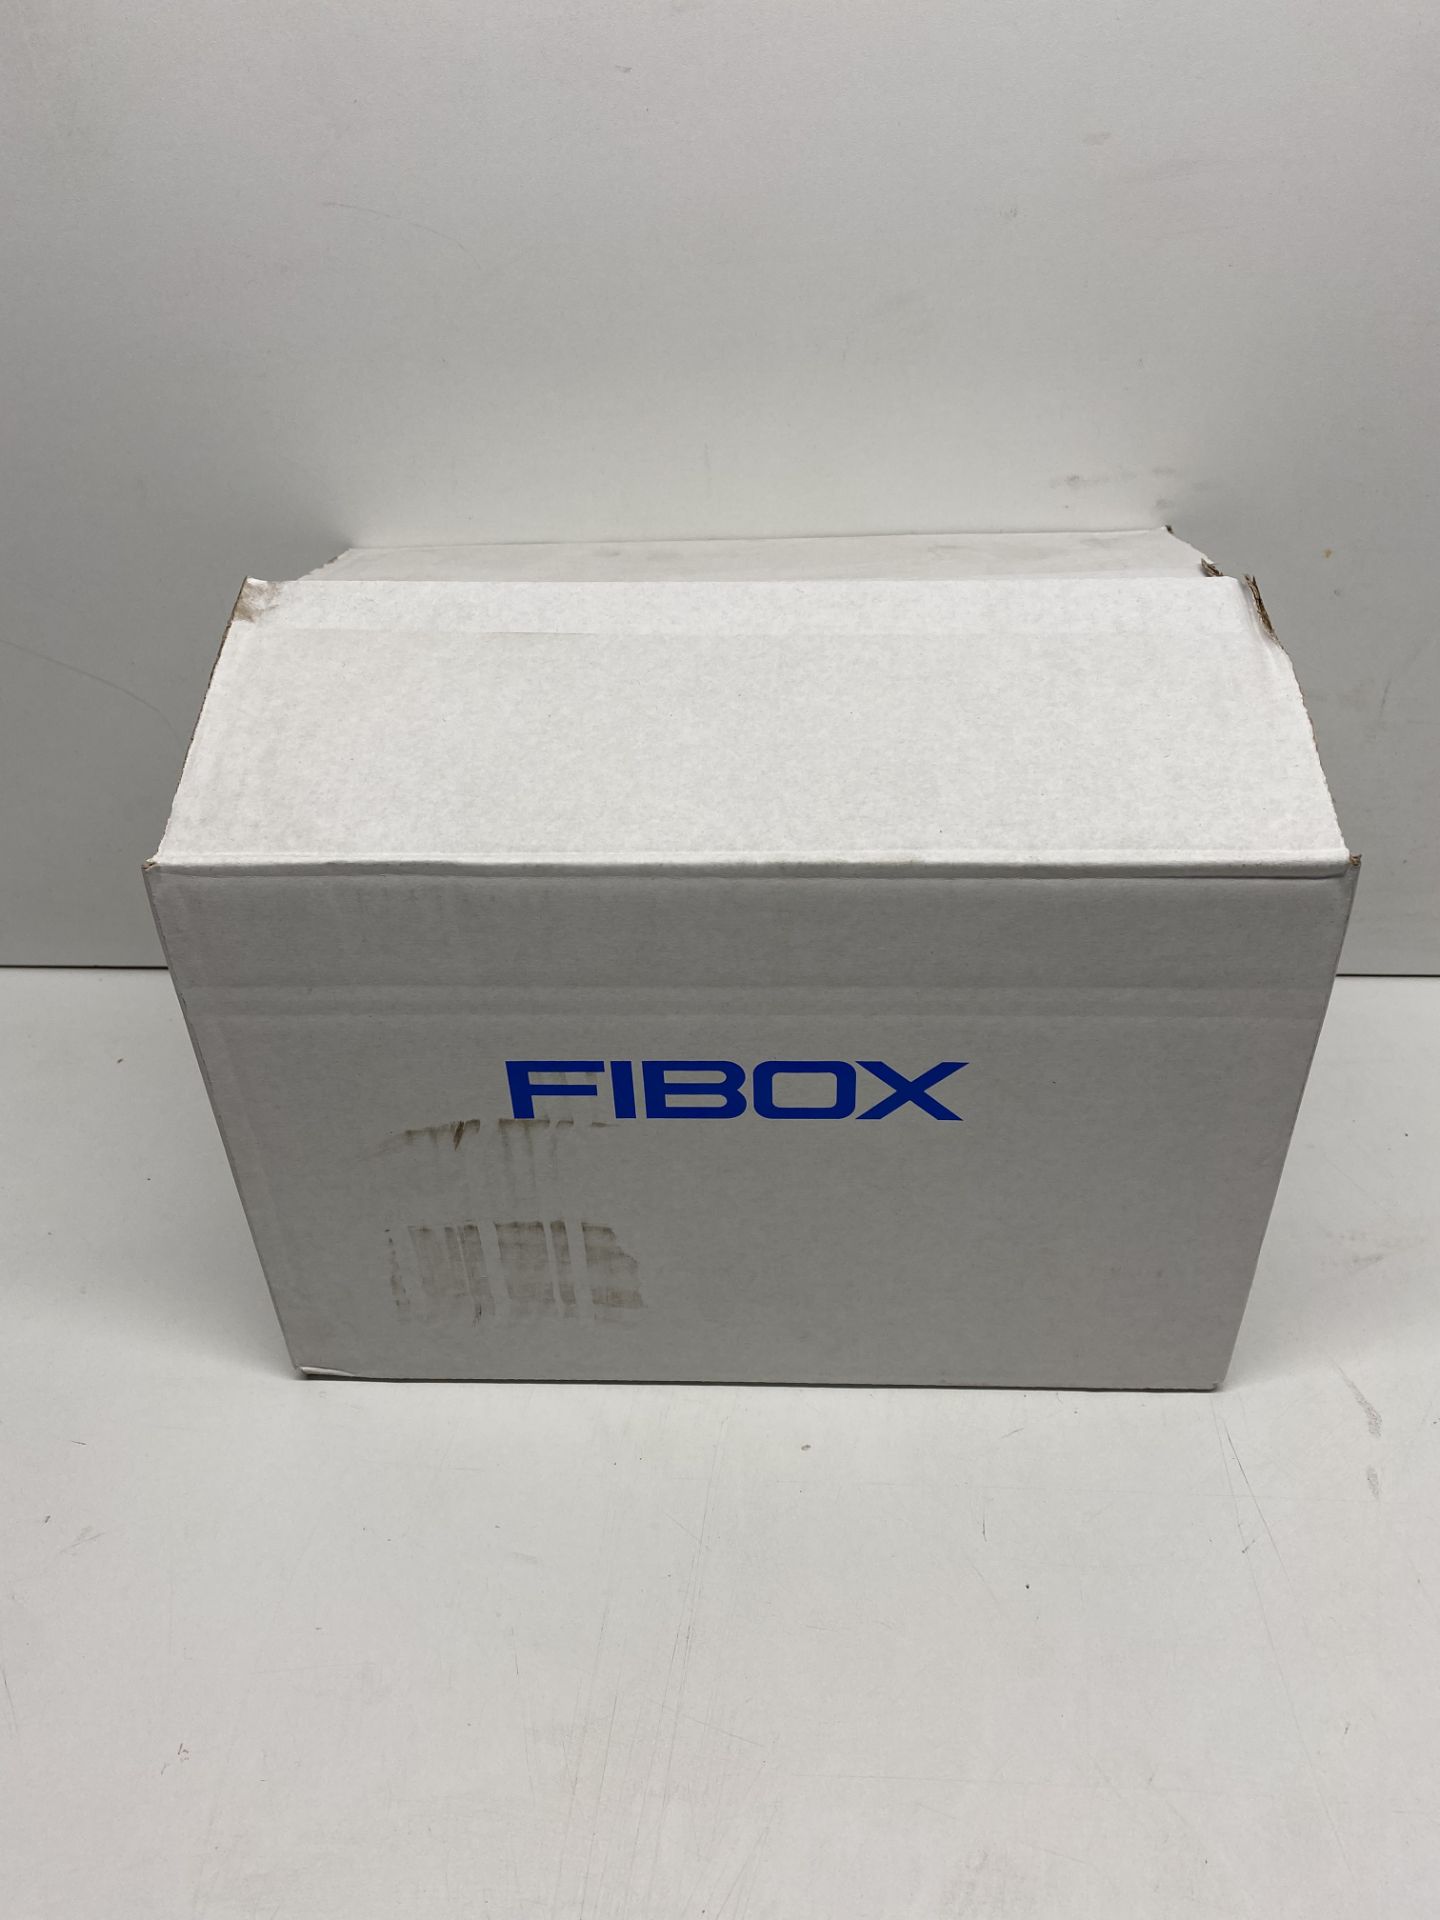 24 x Fibox TA 191209 ENCLOSURE - Image 3 of 3